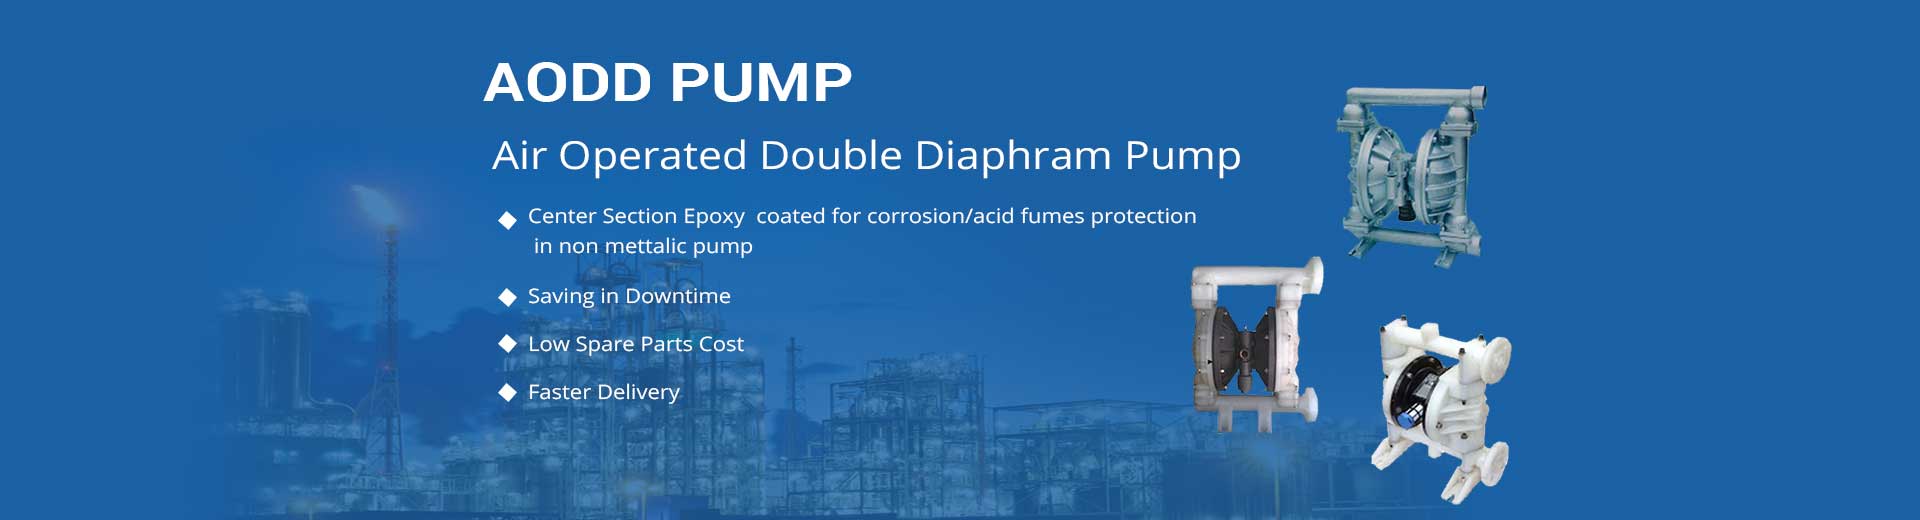 Hermetic Pumps Manufacturer, Supplier, Exporter in india